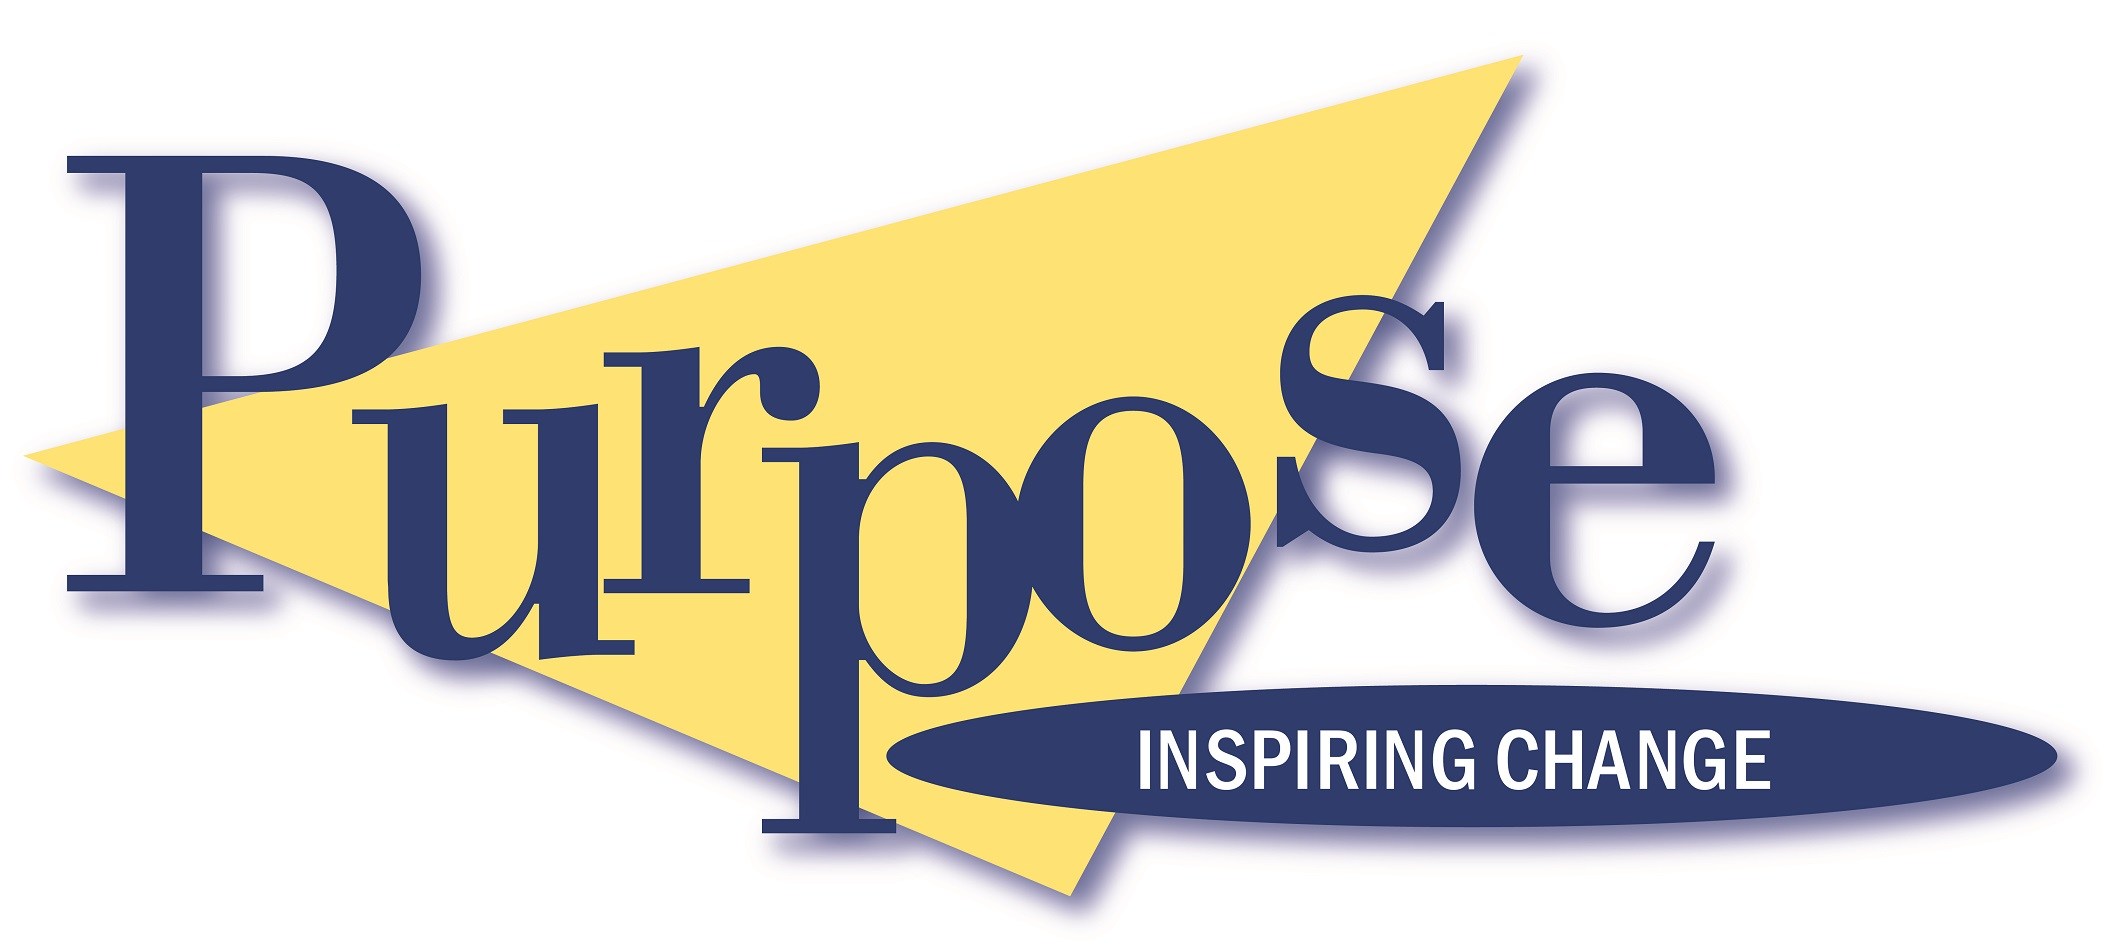 Purpose-Logo-Inspiring-Change-Colored_SMALL-2.jpg